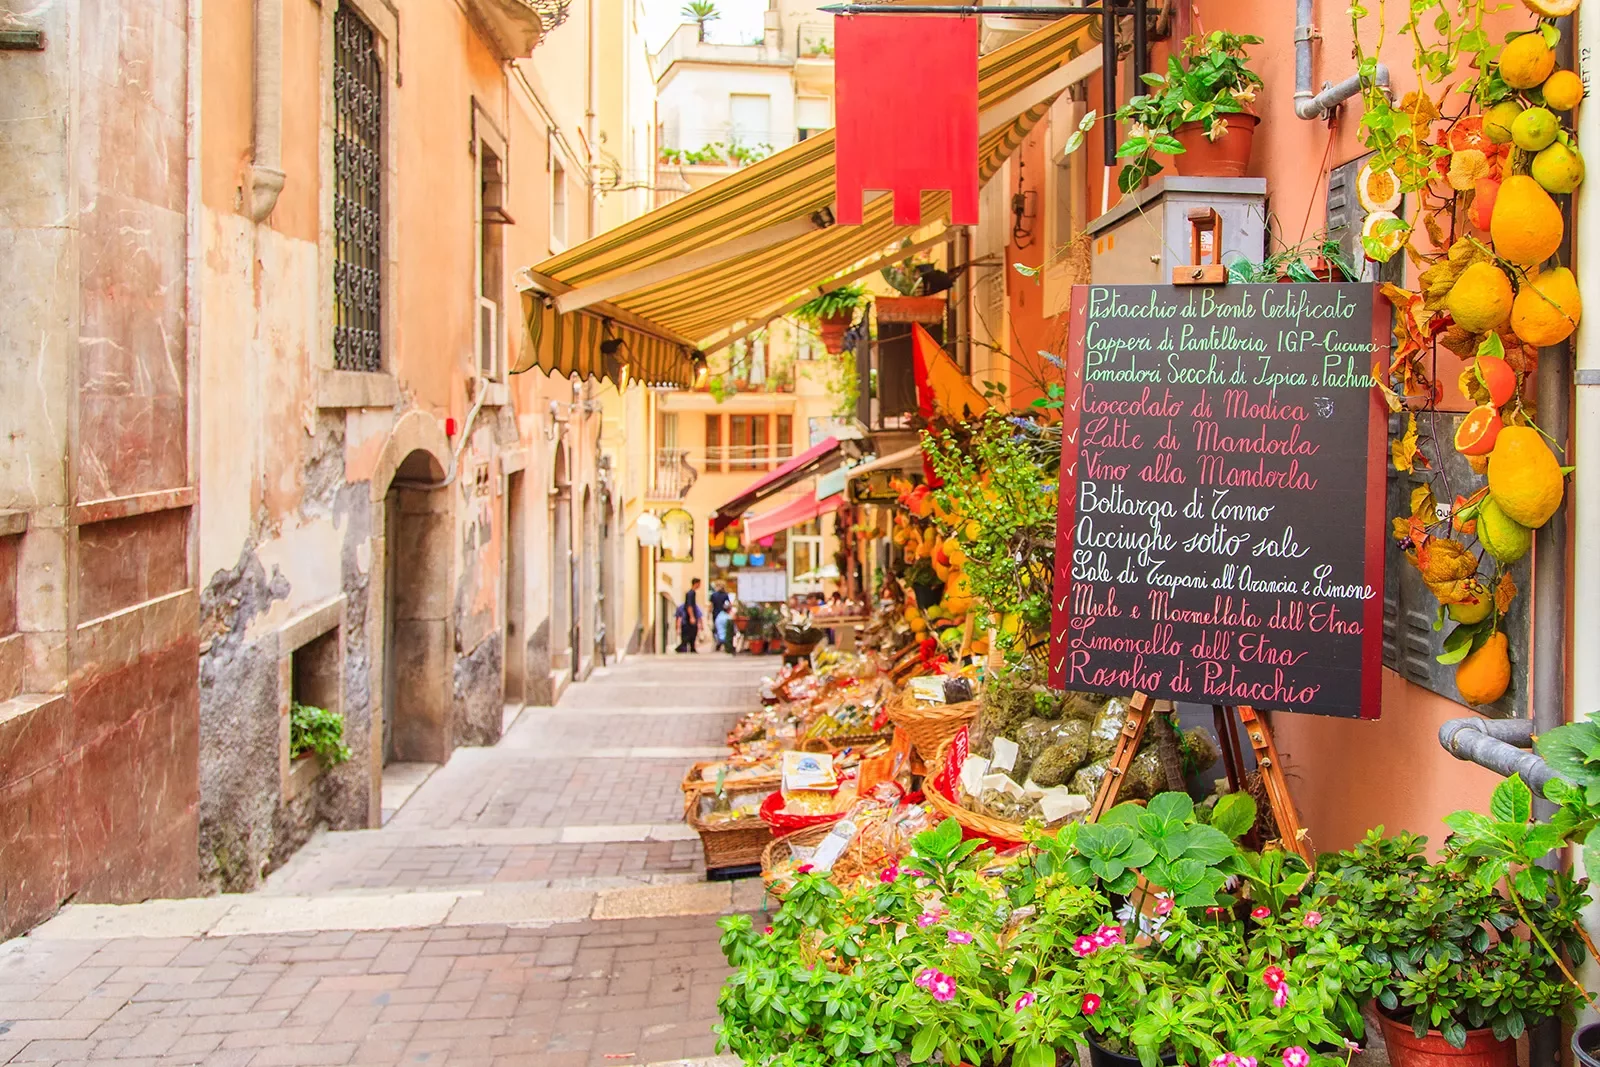 Alleyway shot of Italian restaurant, menu, hanging fruit, baskets behind.